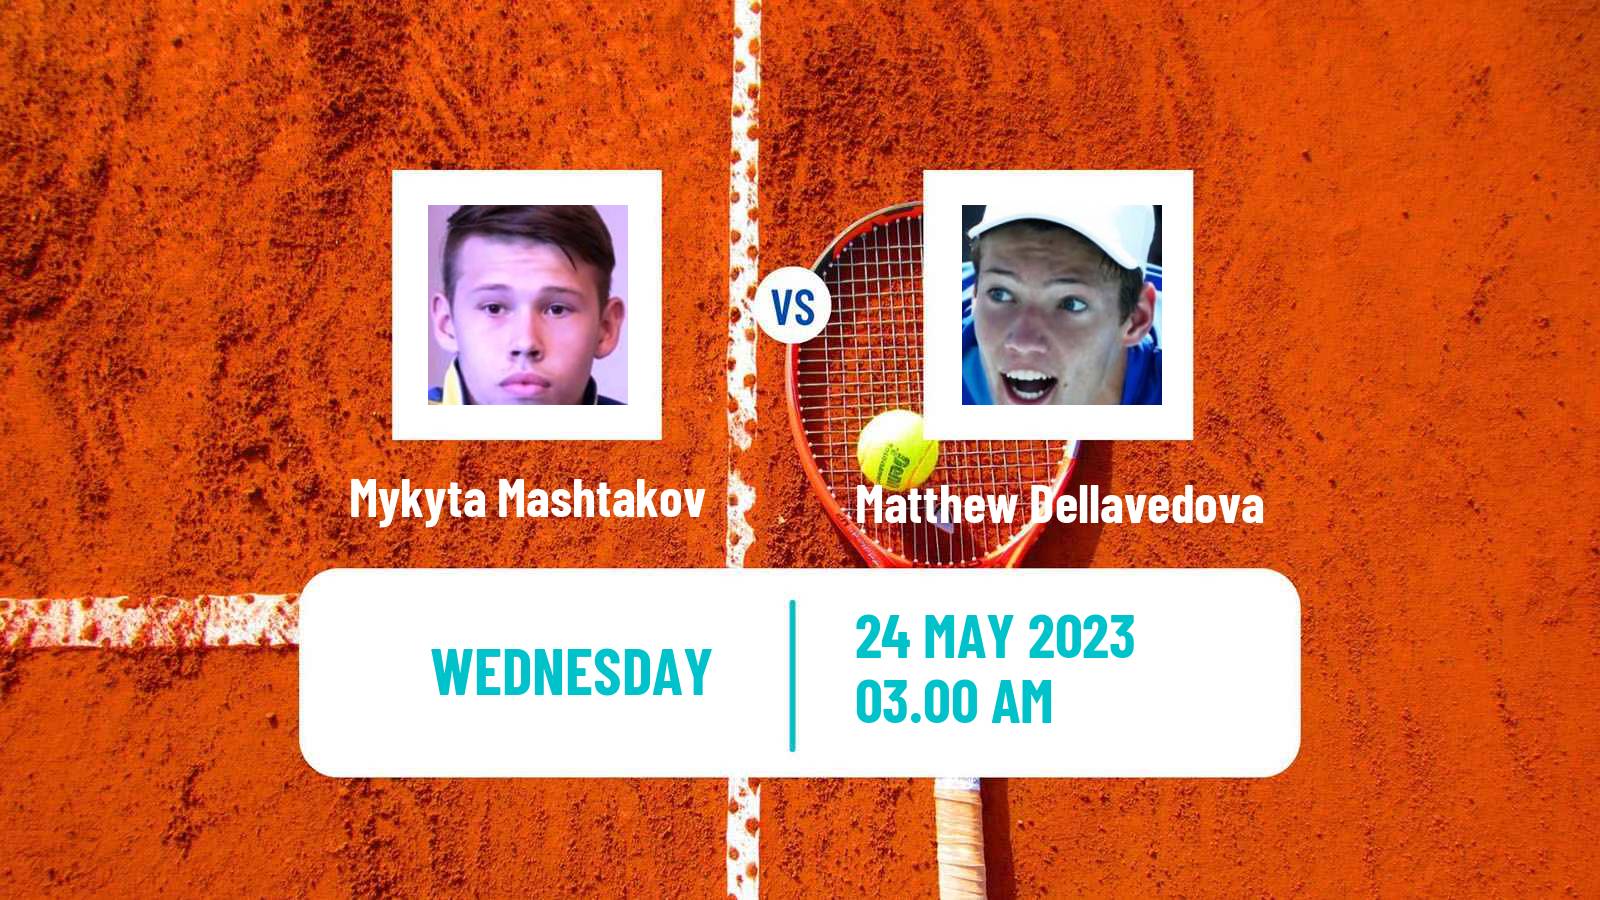 Tennis ITF M15 Kursumlijska Banja 3 Men Mykyta Mashtakov - Matthew Dellavedova